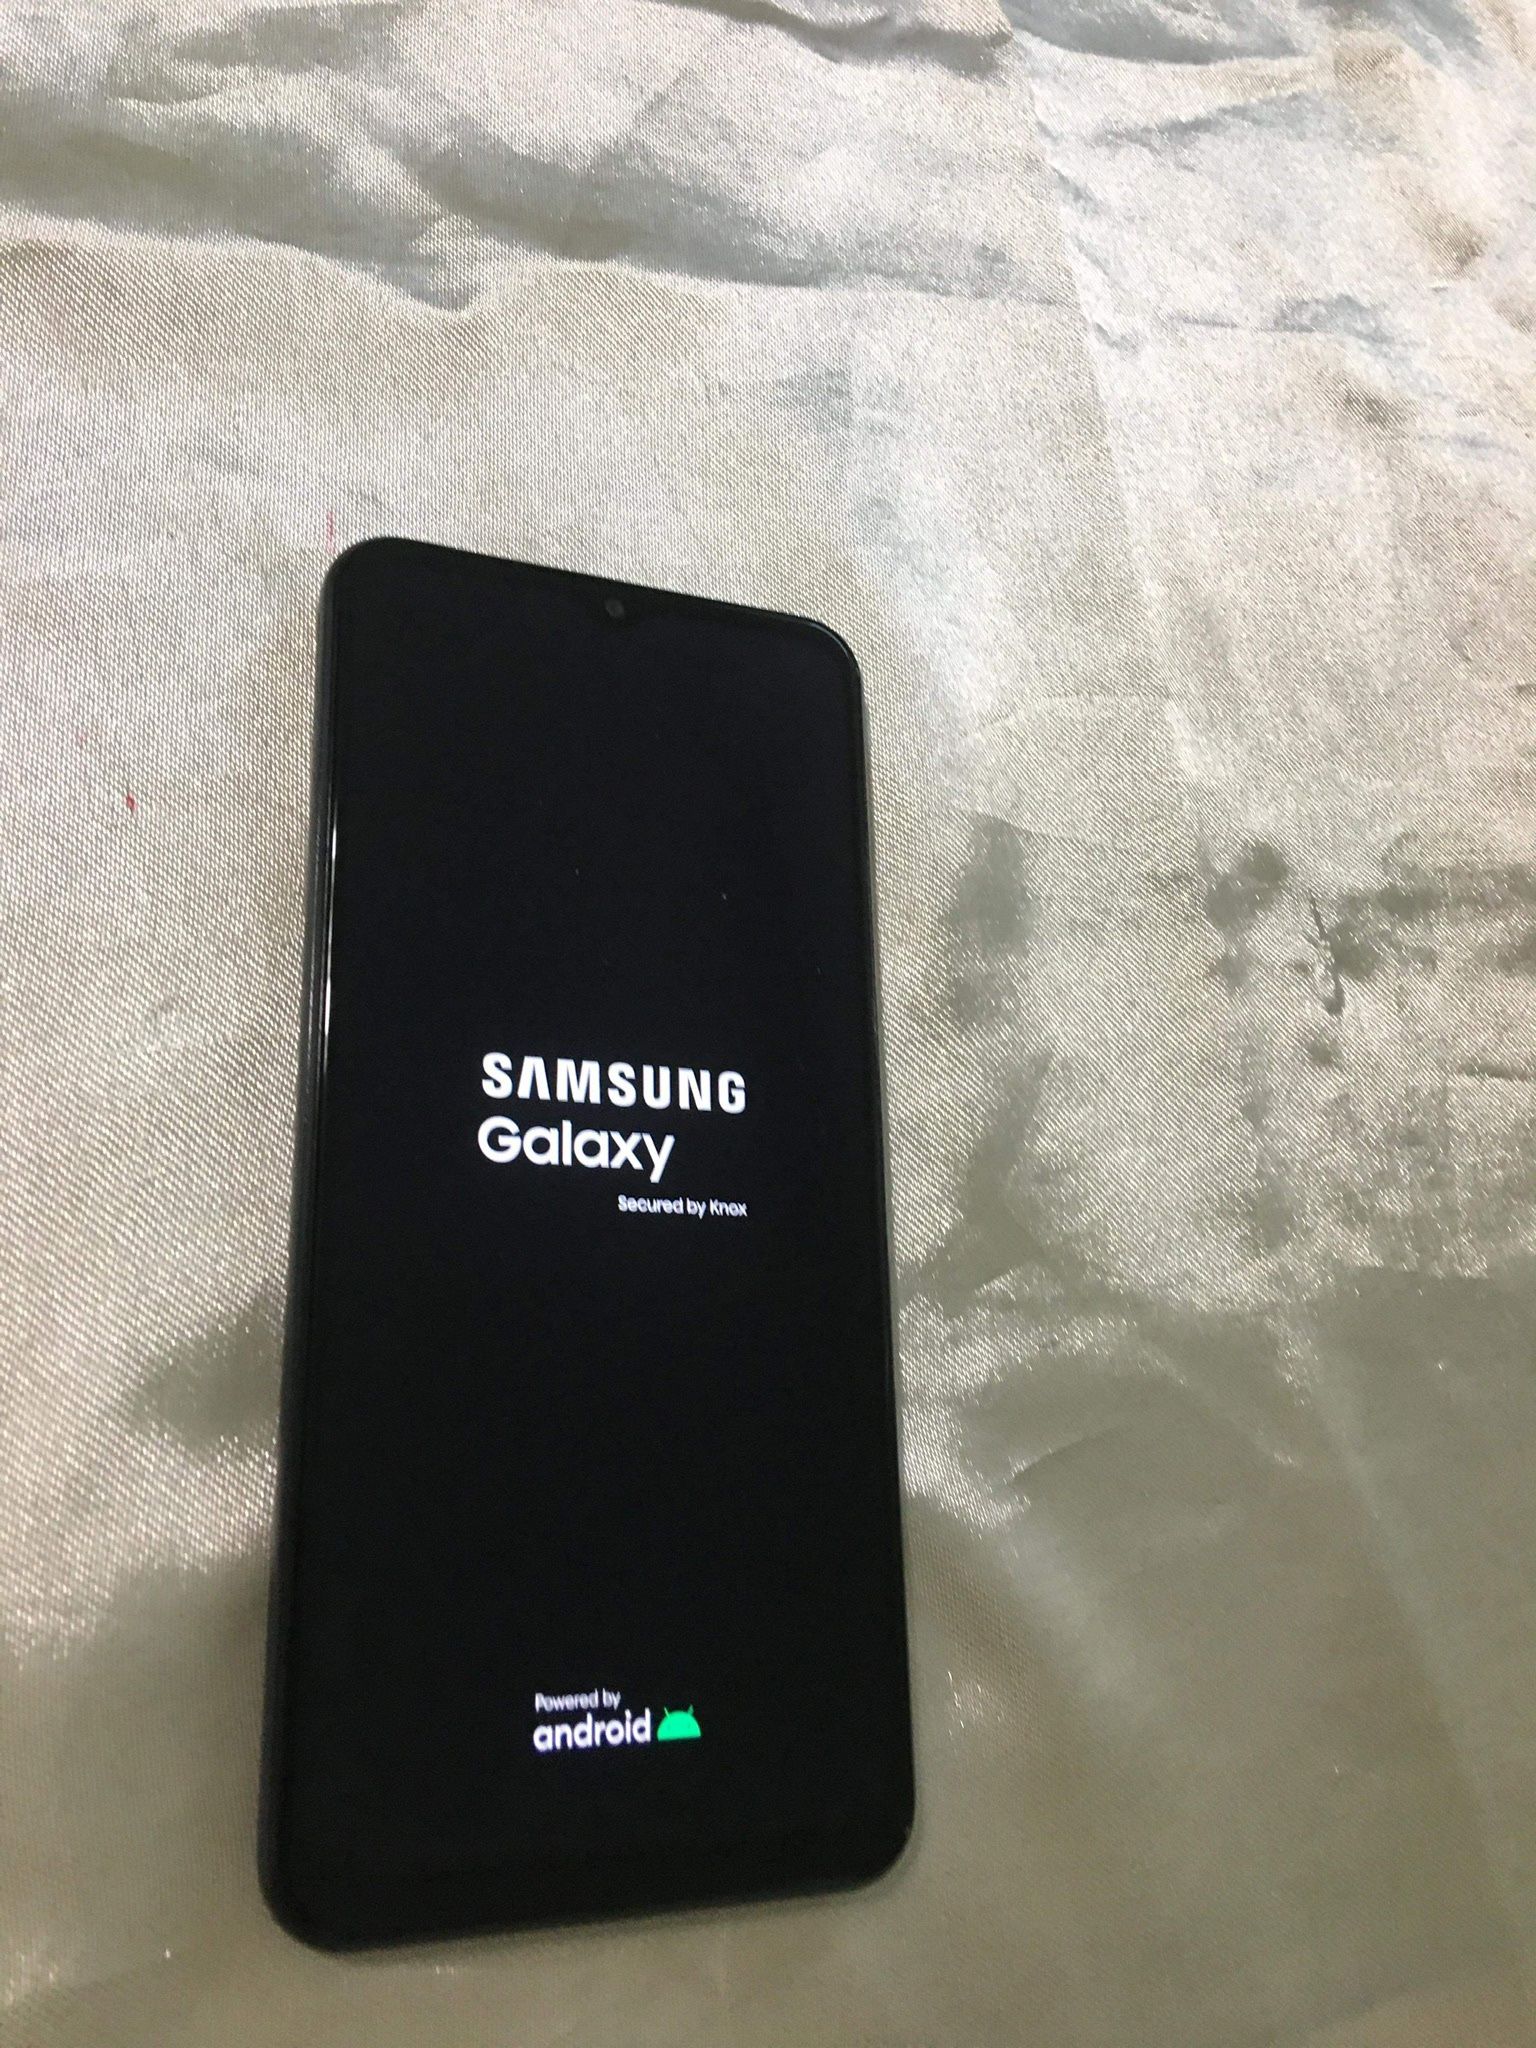 Samsung A13